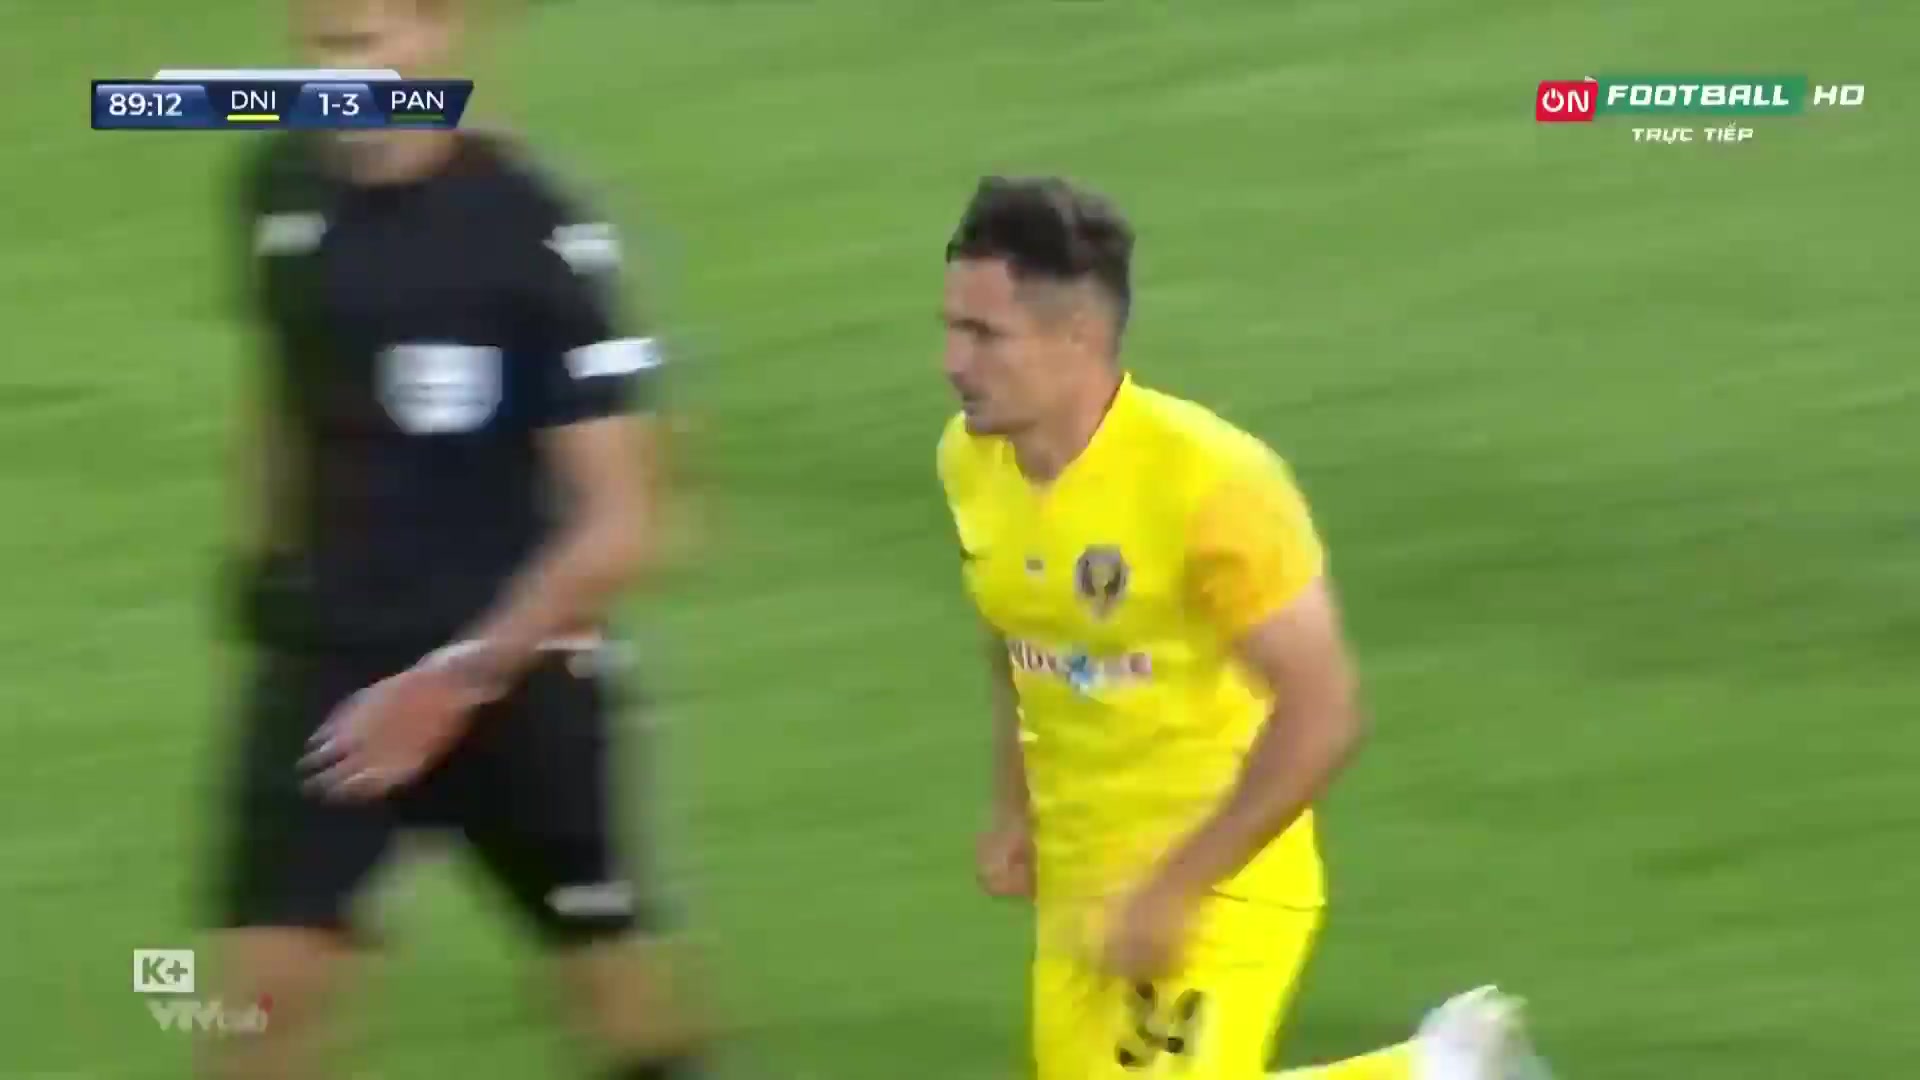 UEFA CL Dnipro-1 Vs Panathinaikos  Goal in 90 min, Score 1:3